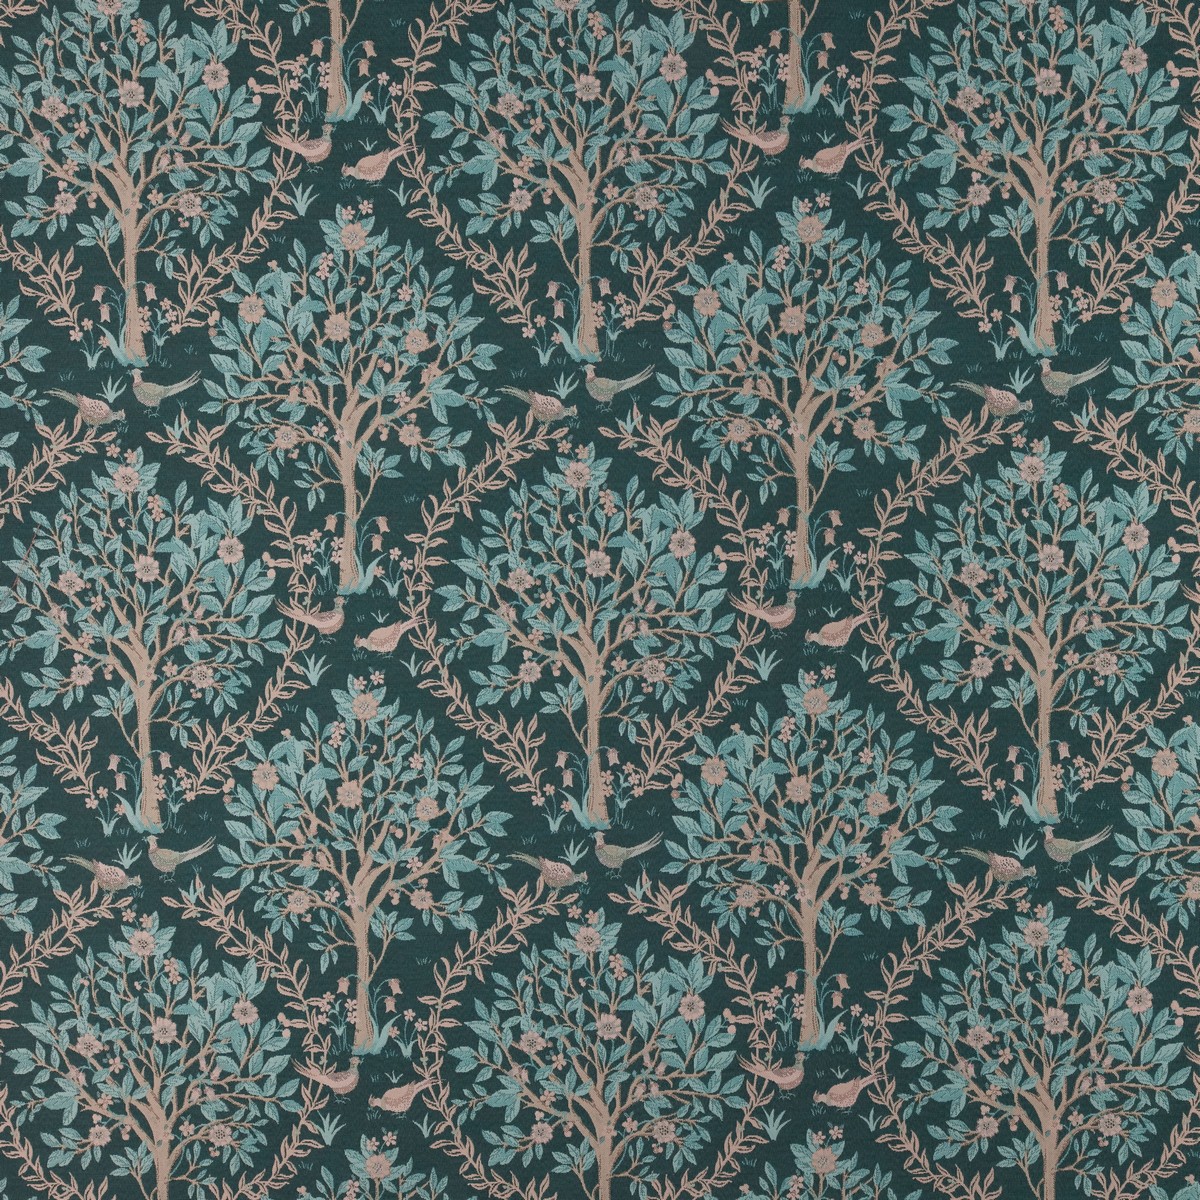 Bedgebury Peacock Fabric by Ashley Wilde